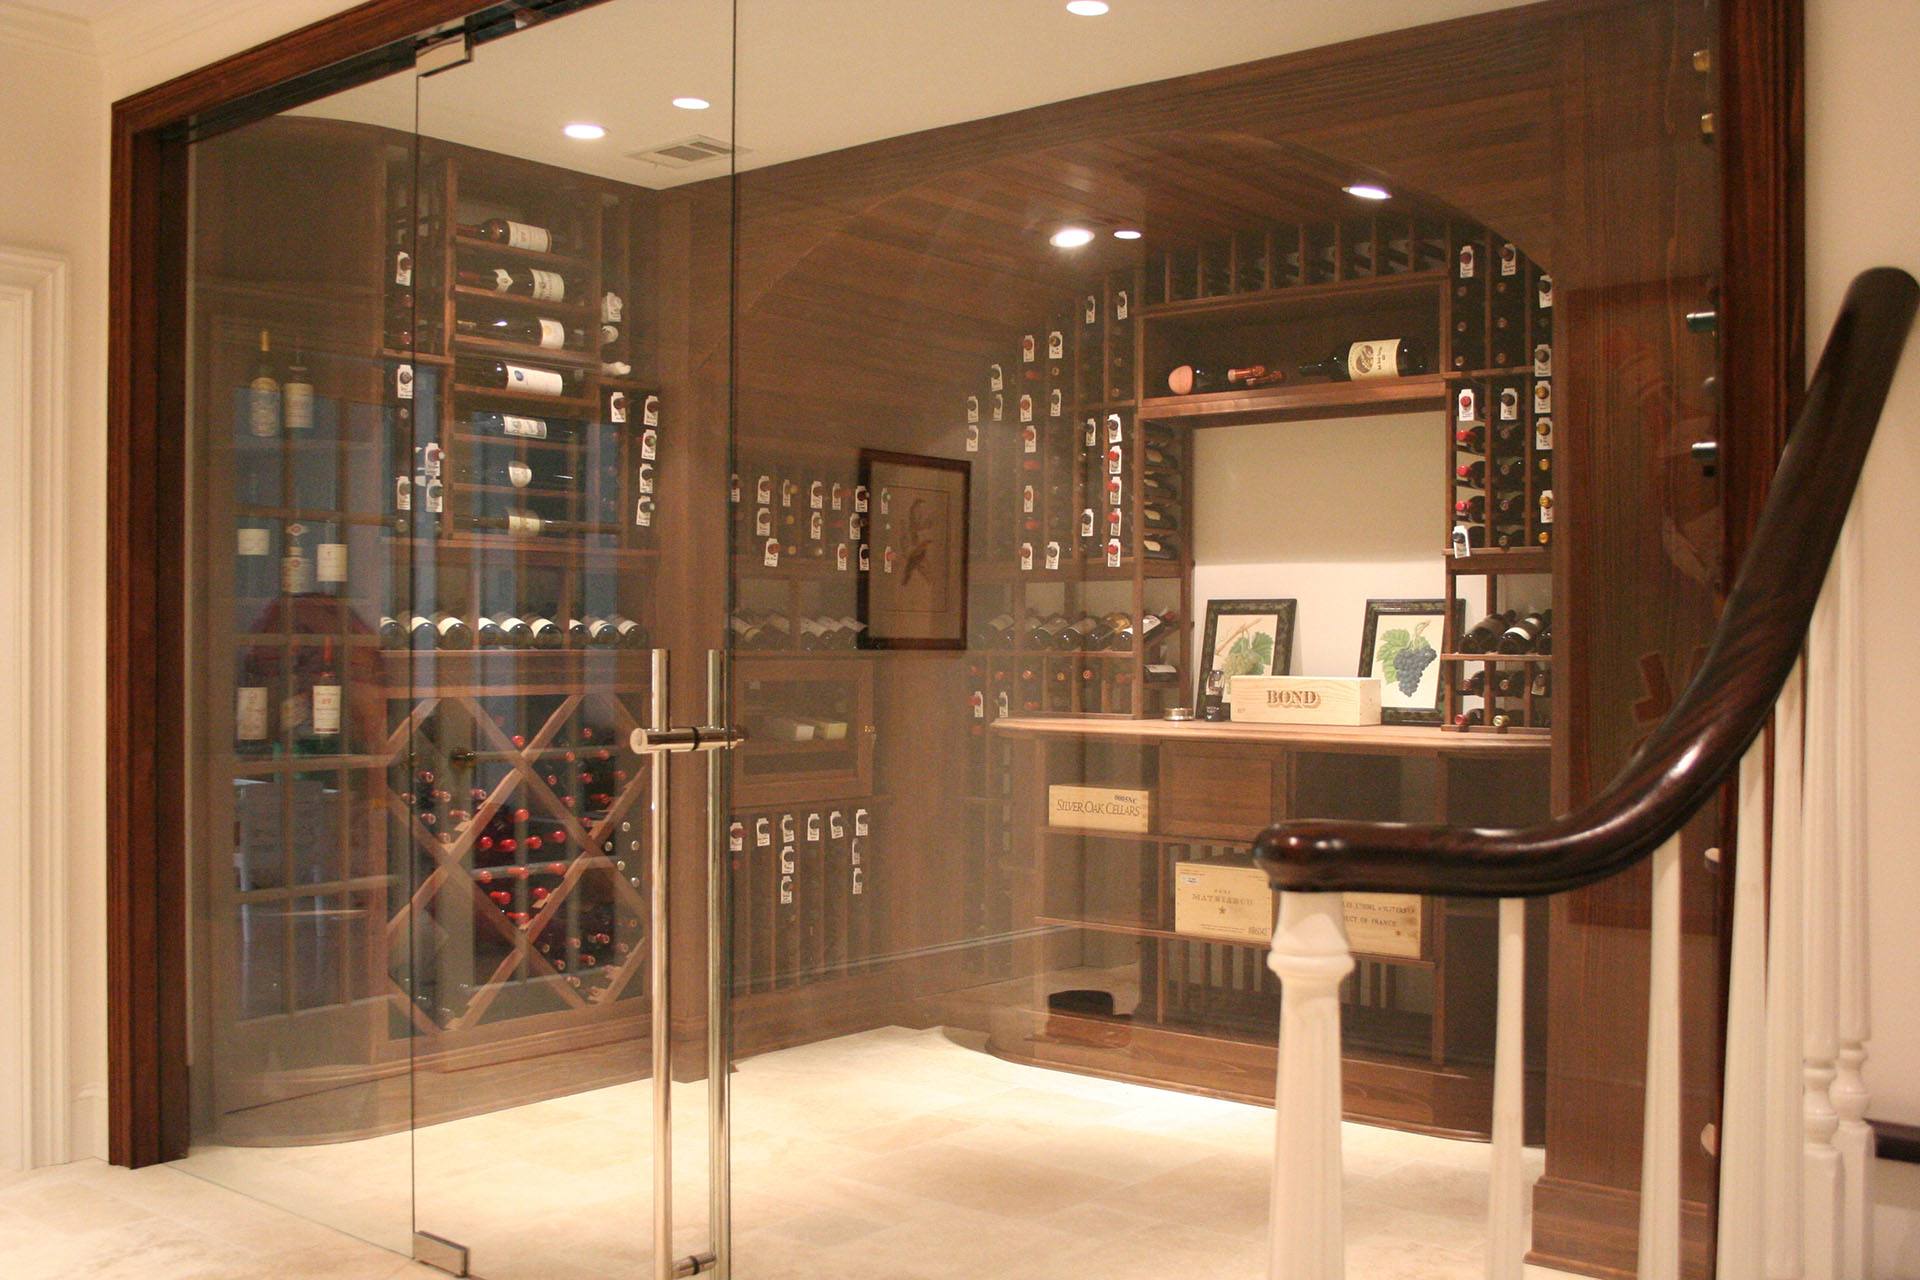 Glass window and door enclosing a wine cellar